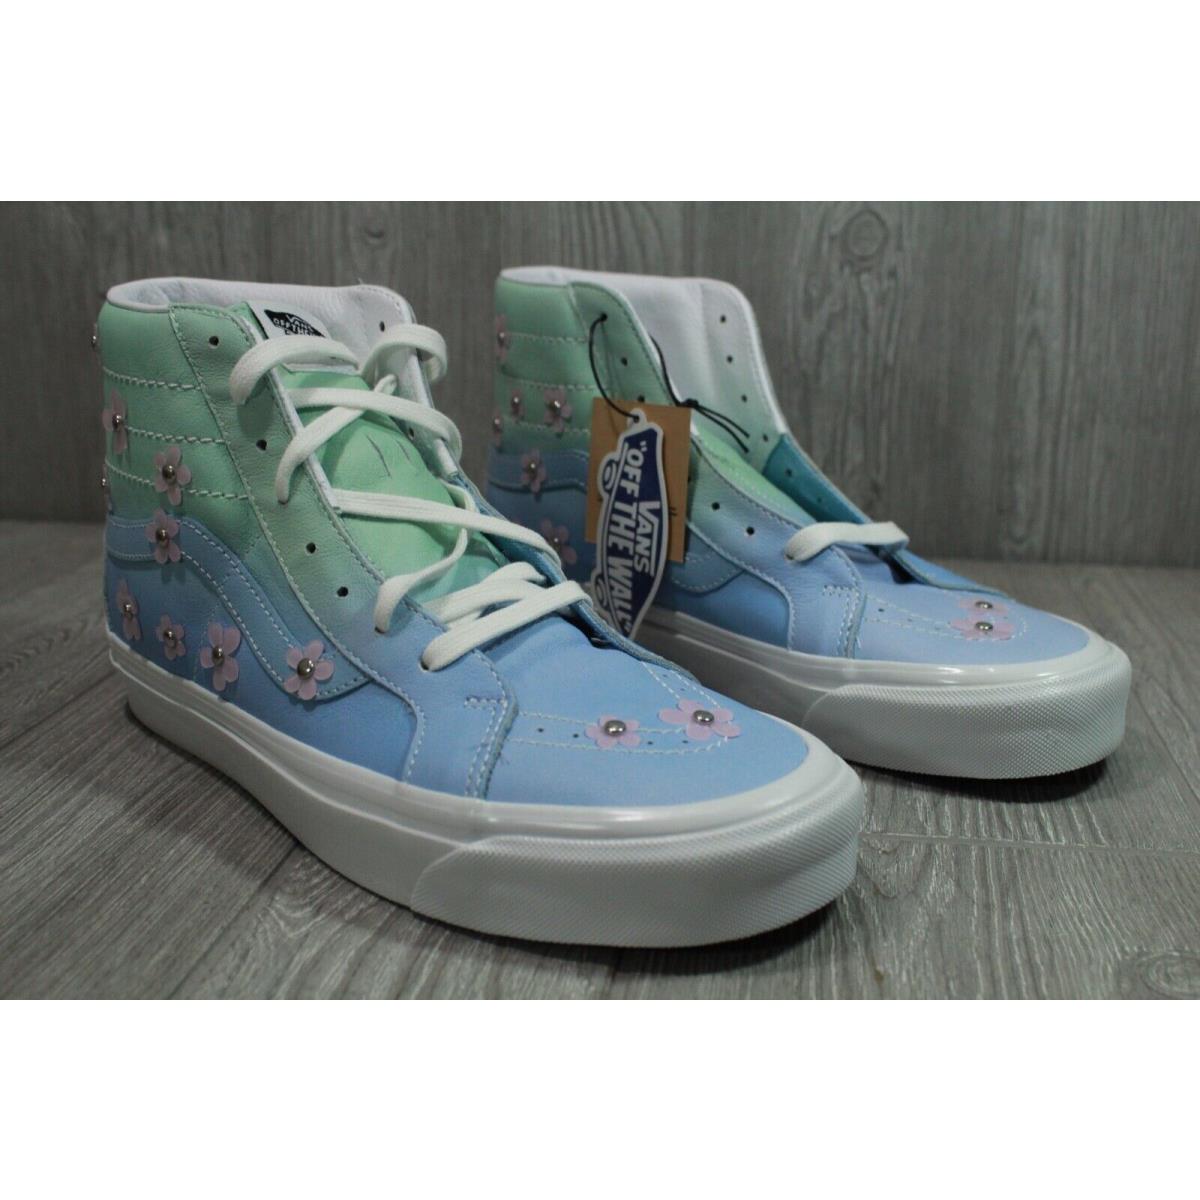 Vans shoes SpongeBob Sandy Liang - Multicolor 1